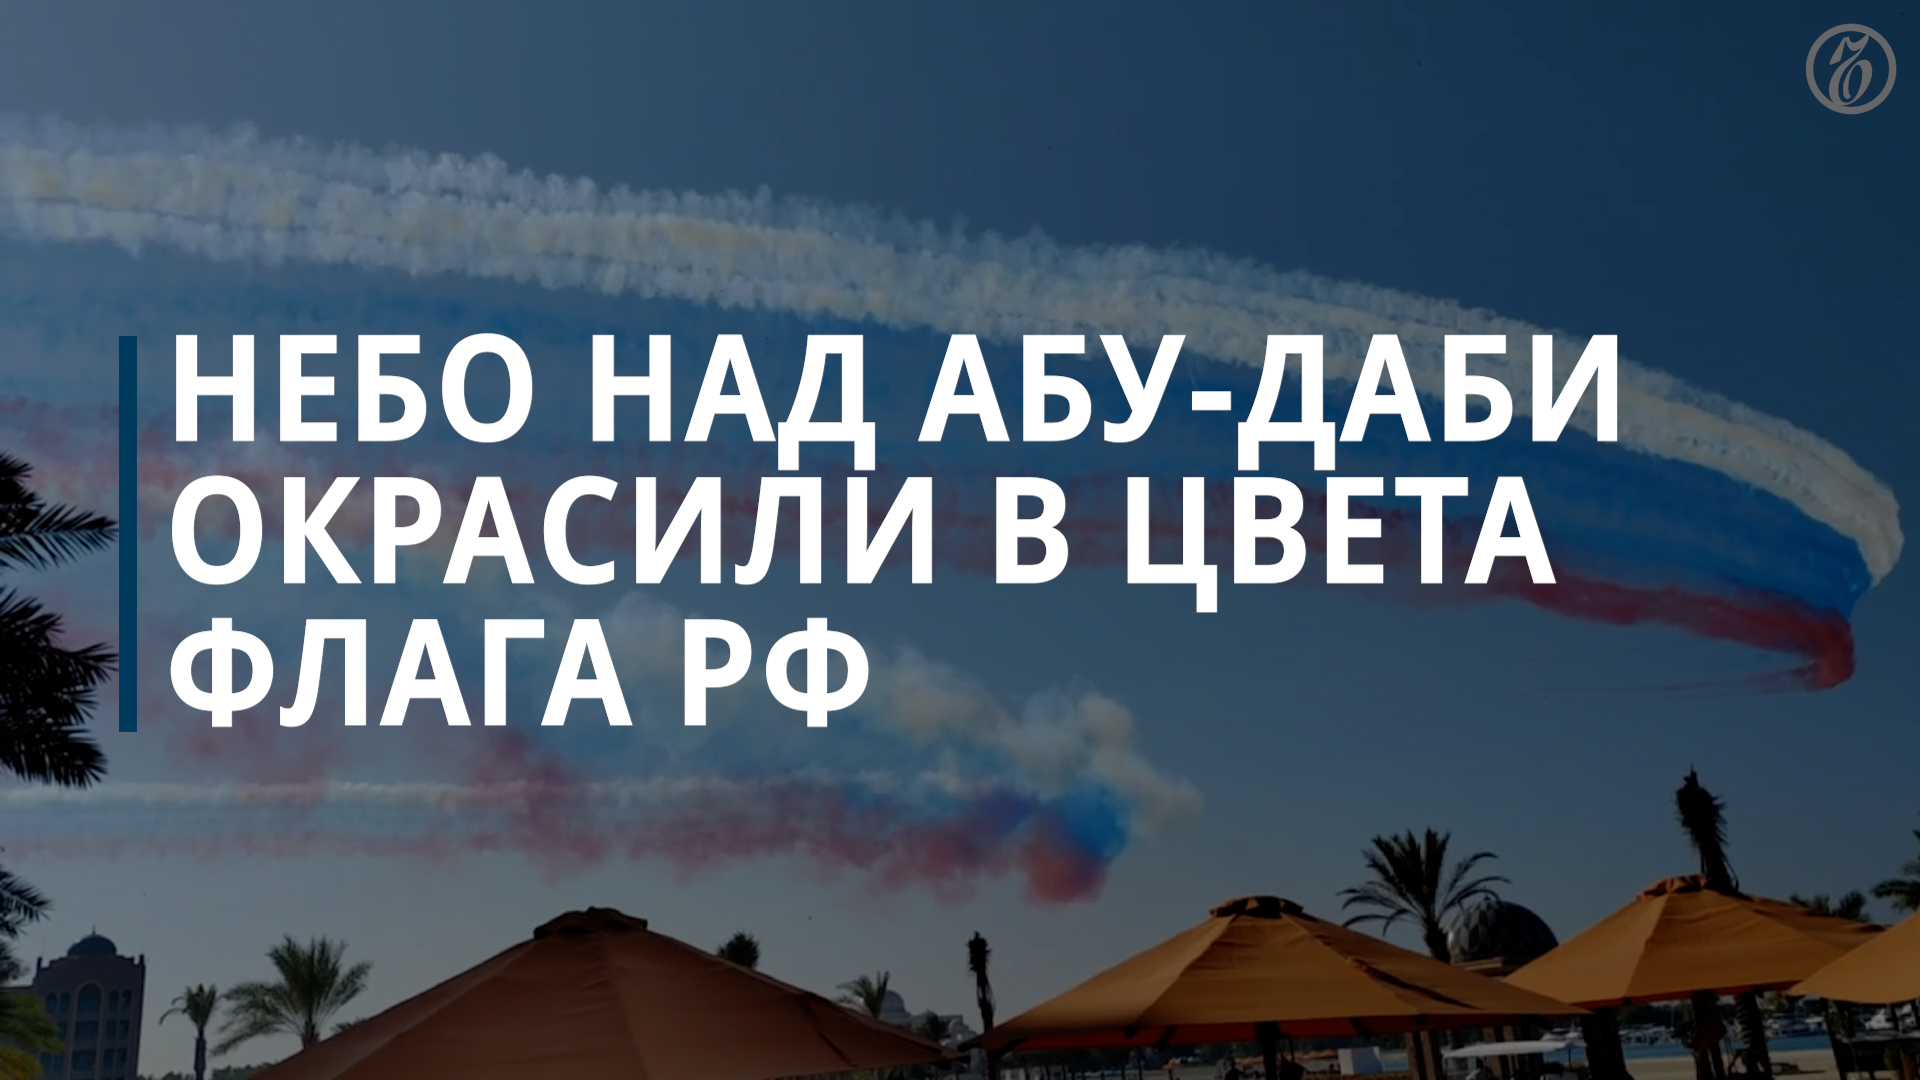 В Абу-Даби в честь приезда Путина устроили авиапарад с цветами флага России — Коммерсантъ